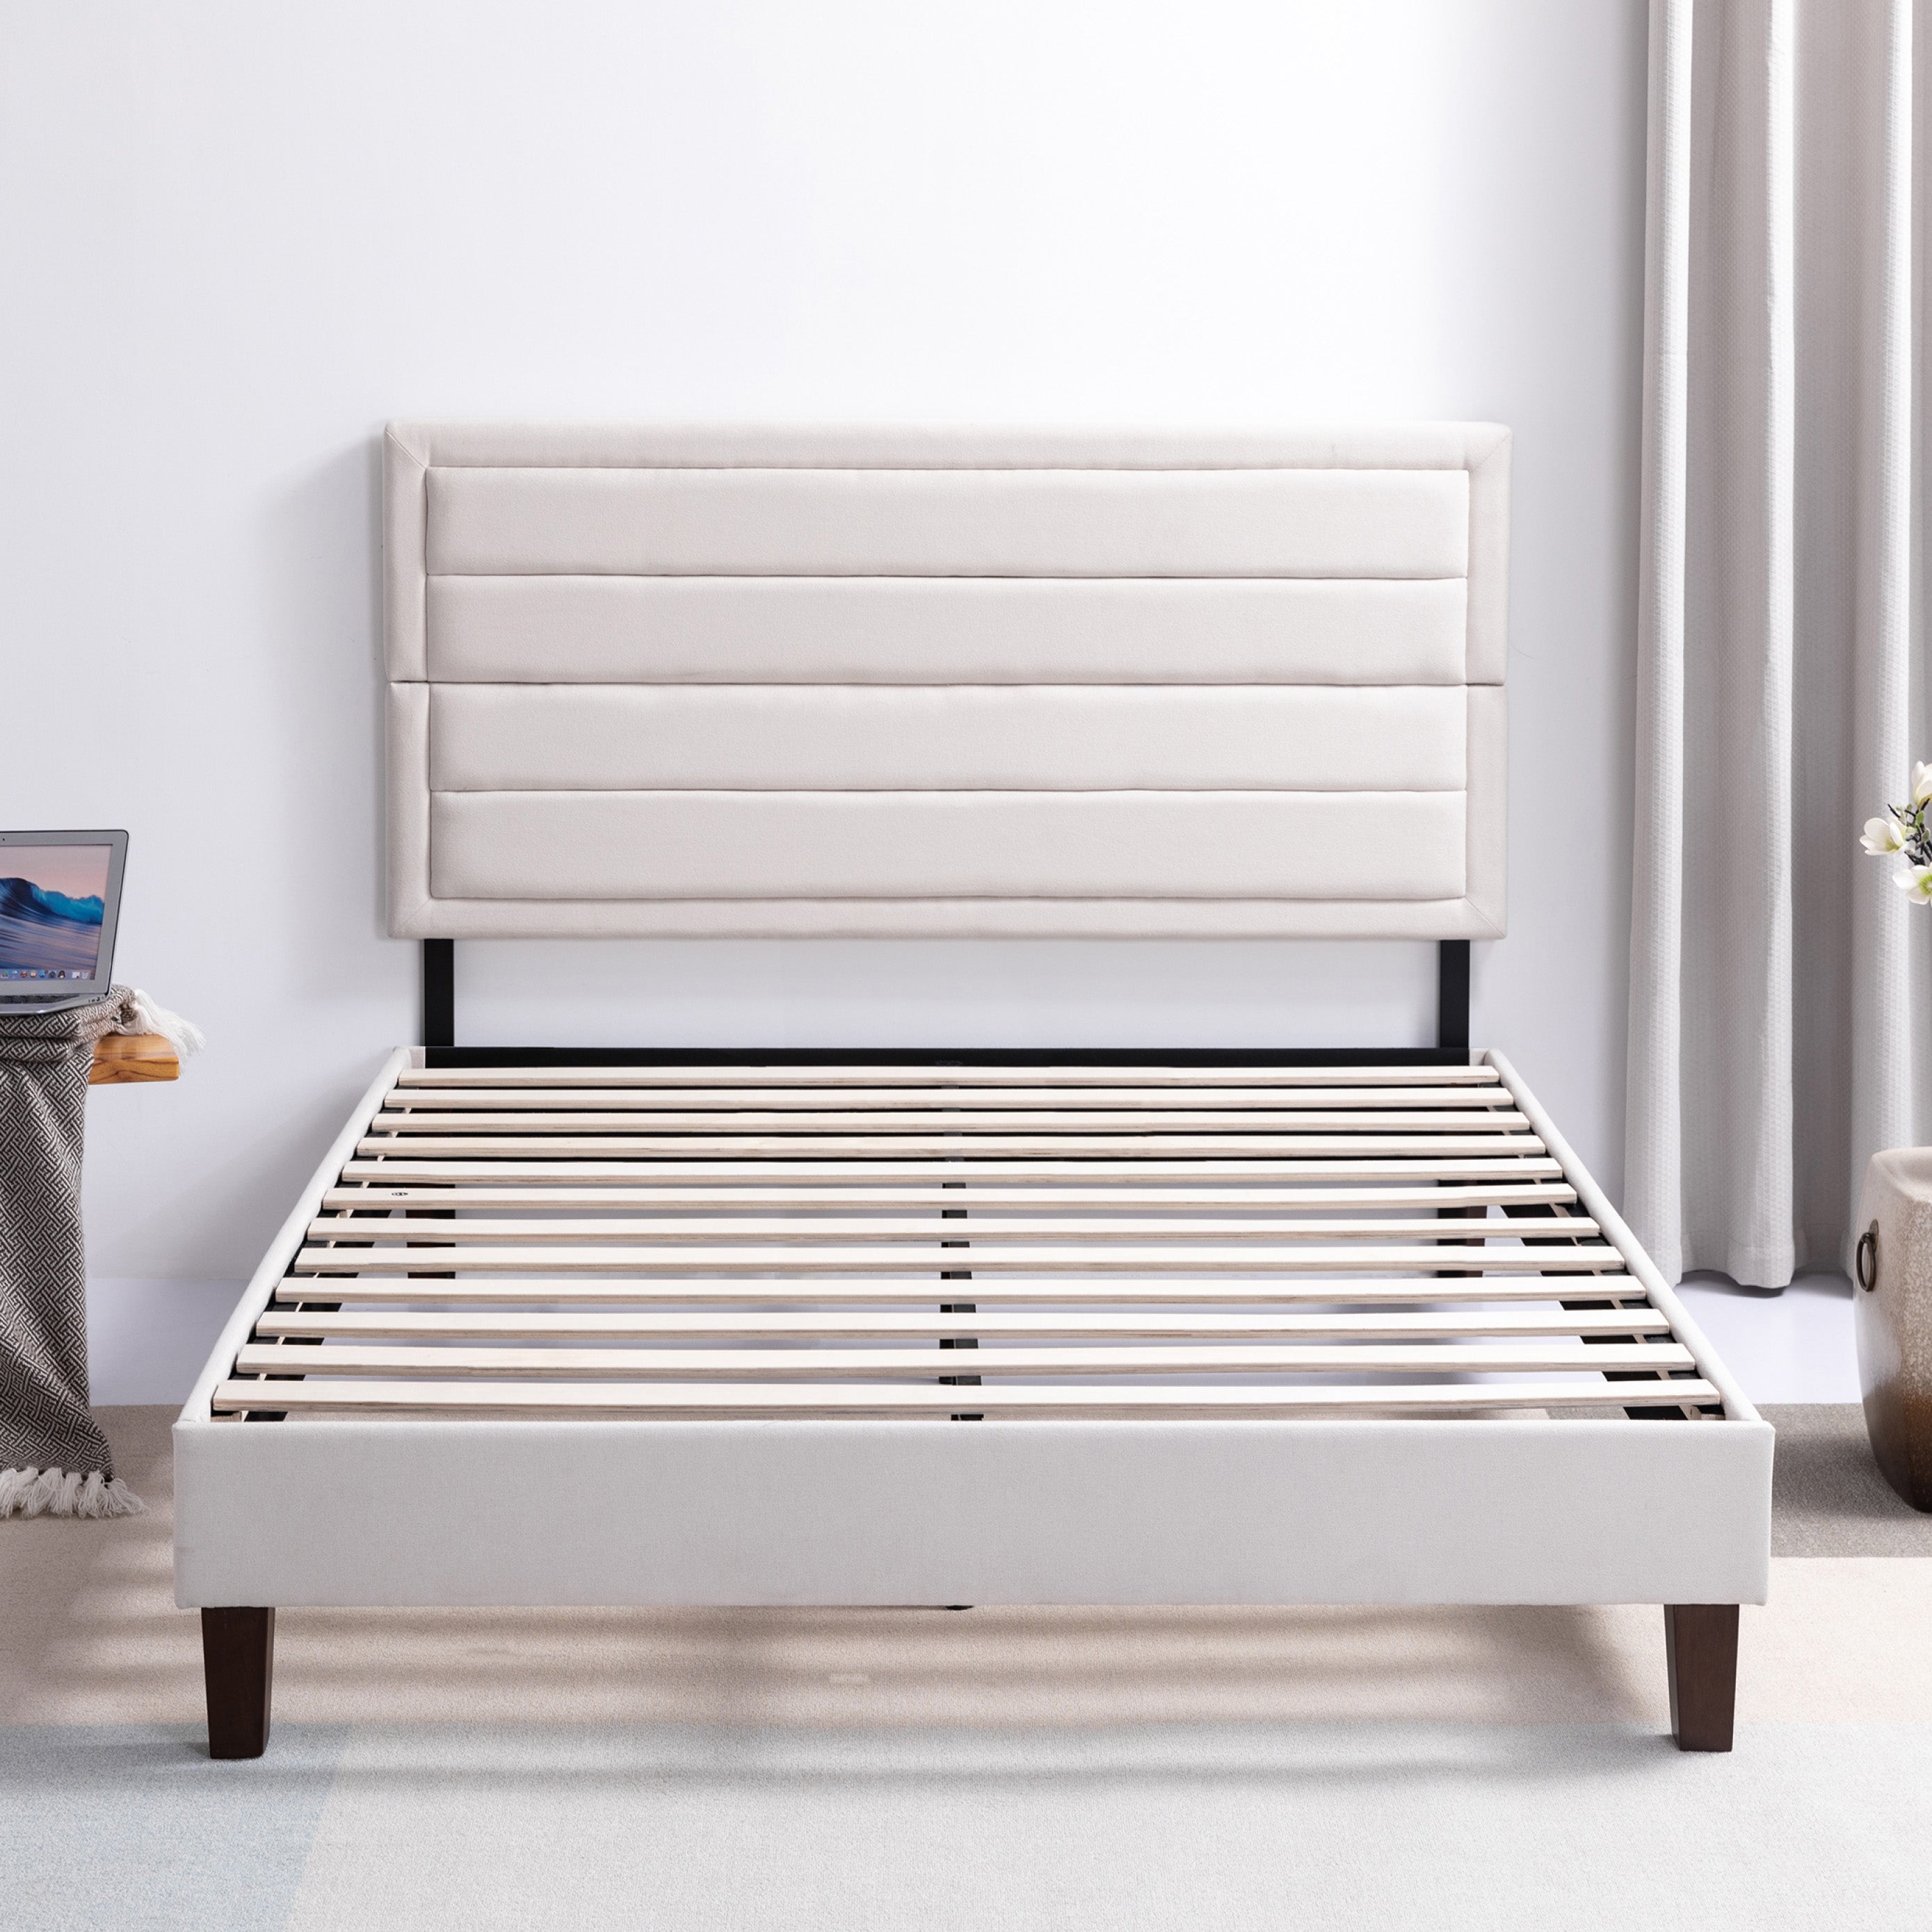 ZNTS Upholstered Platform Bed Frame Queen / Headboad and Storage /Wood Slat Support / Beige W125349296